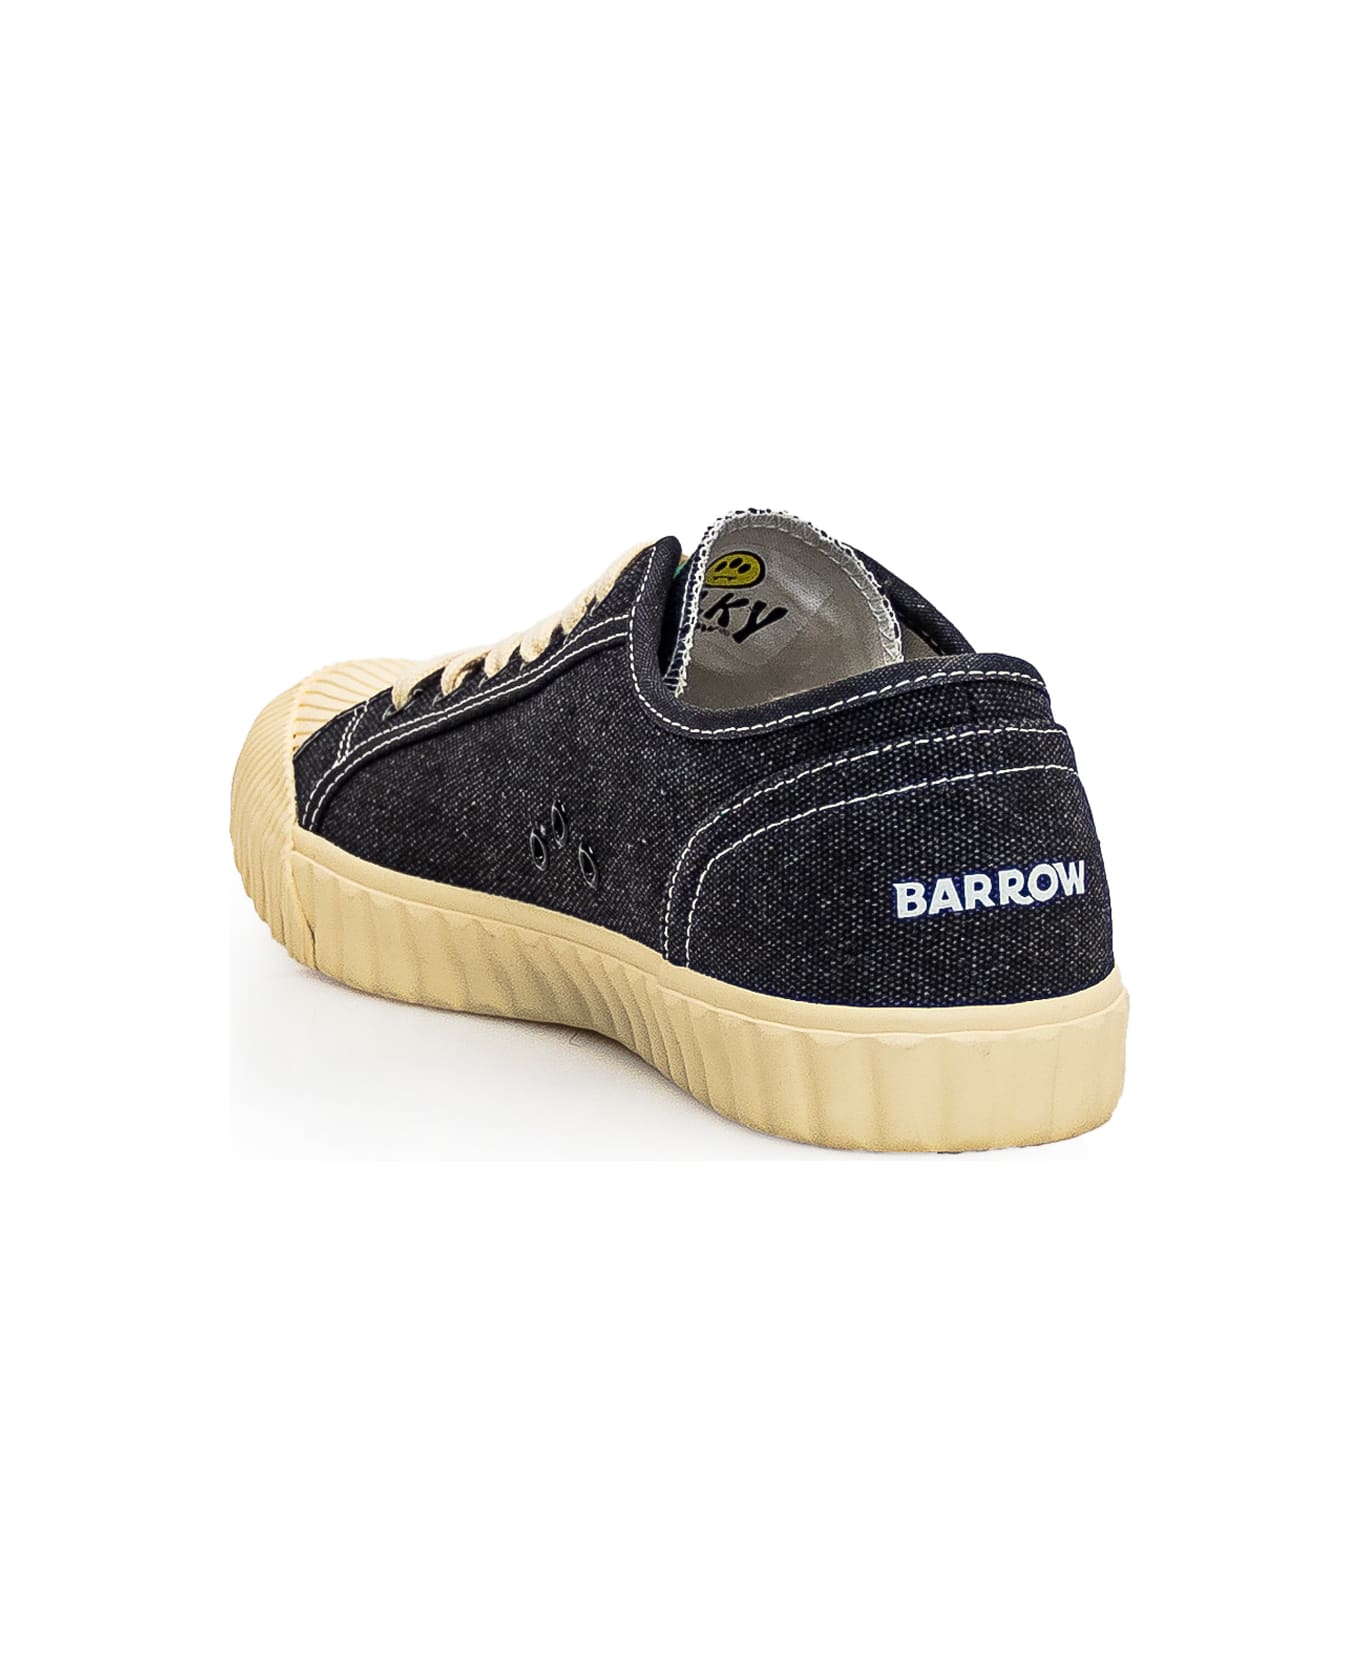 Barrow Vulky Sneaker - NERO/BLACK